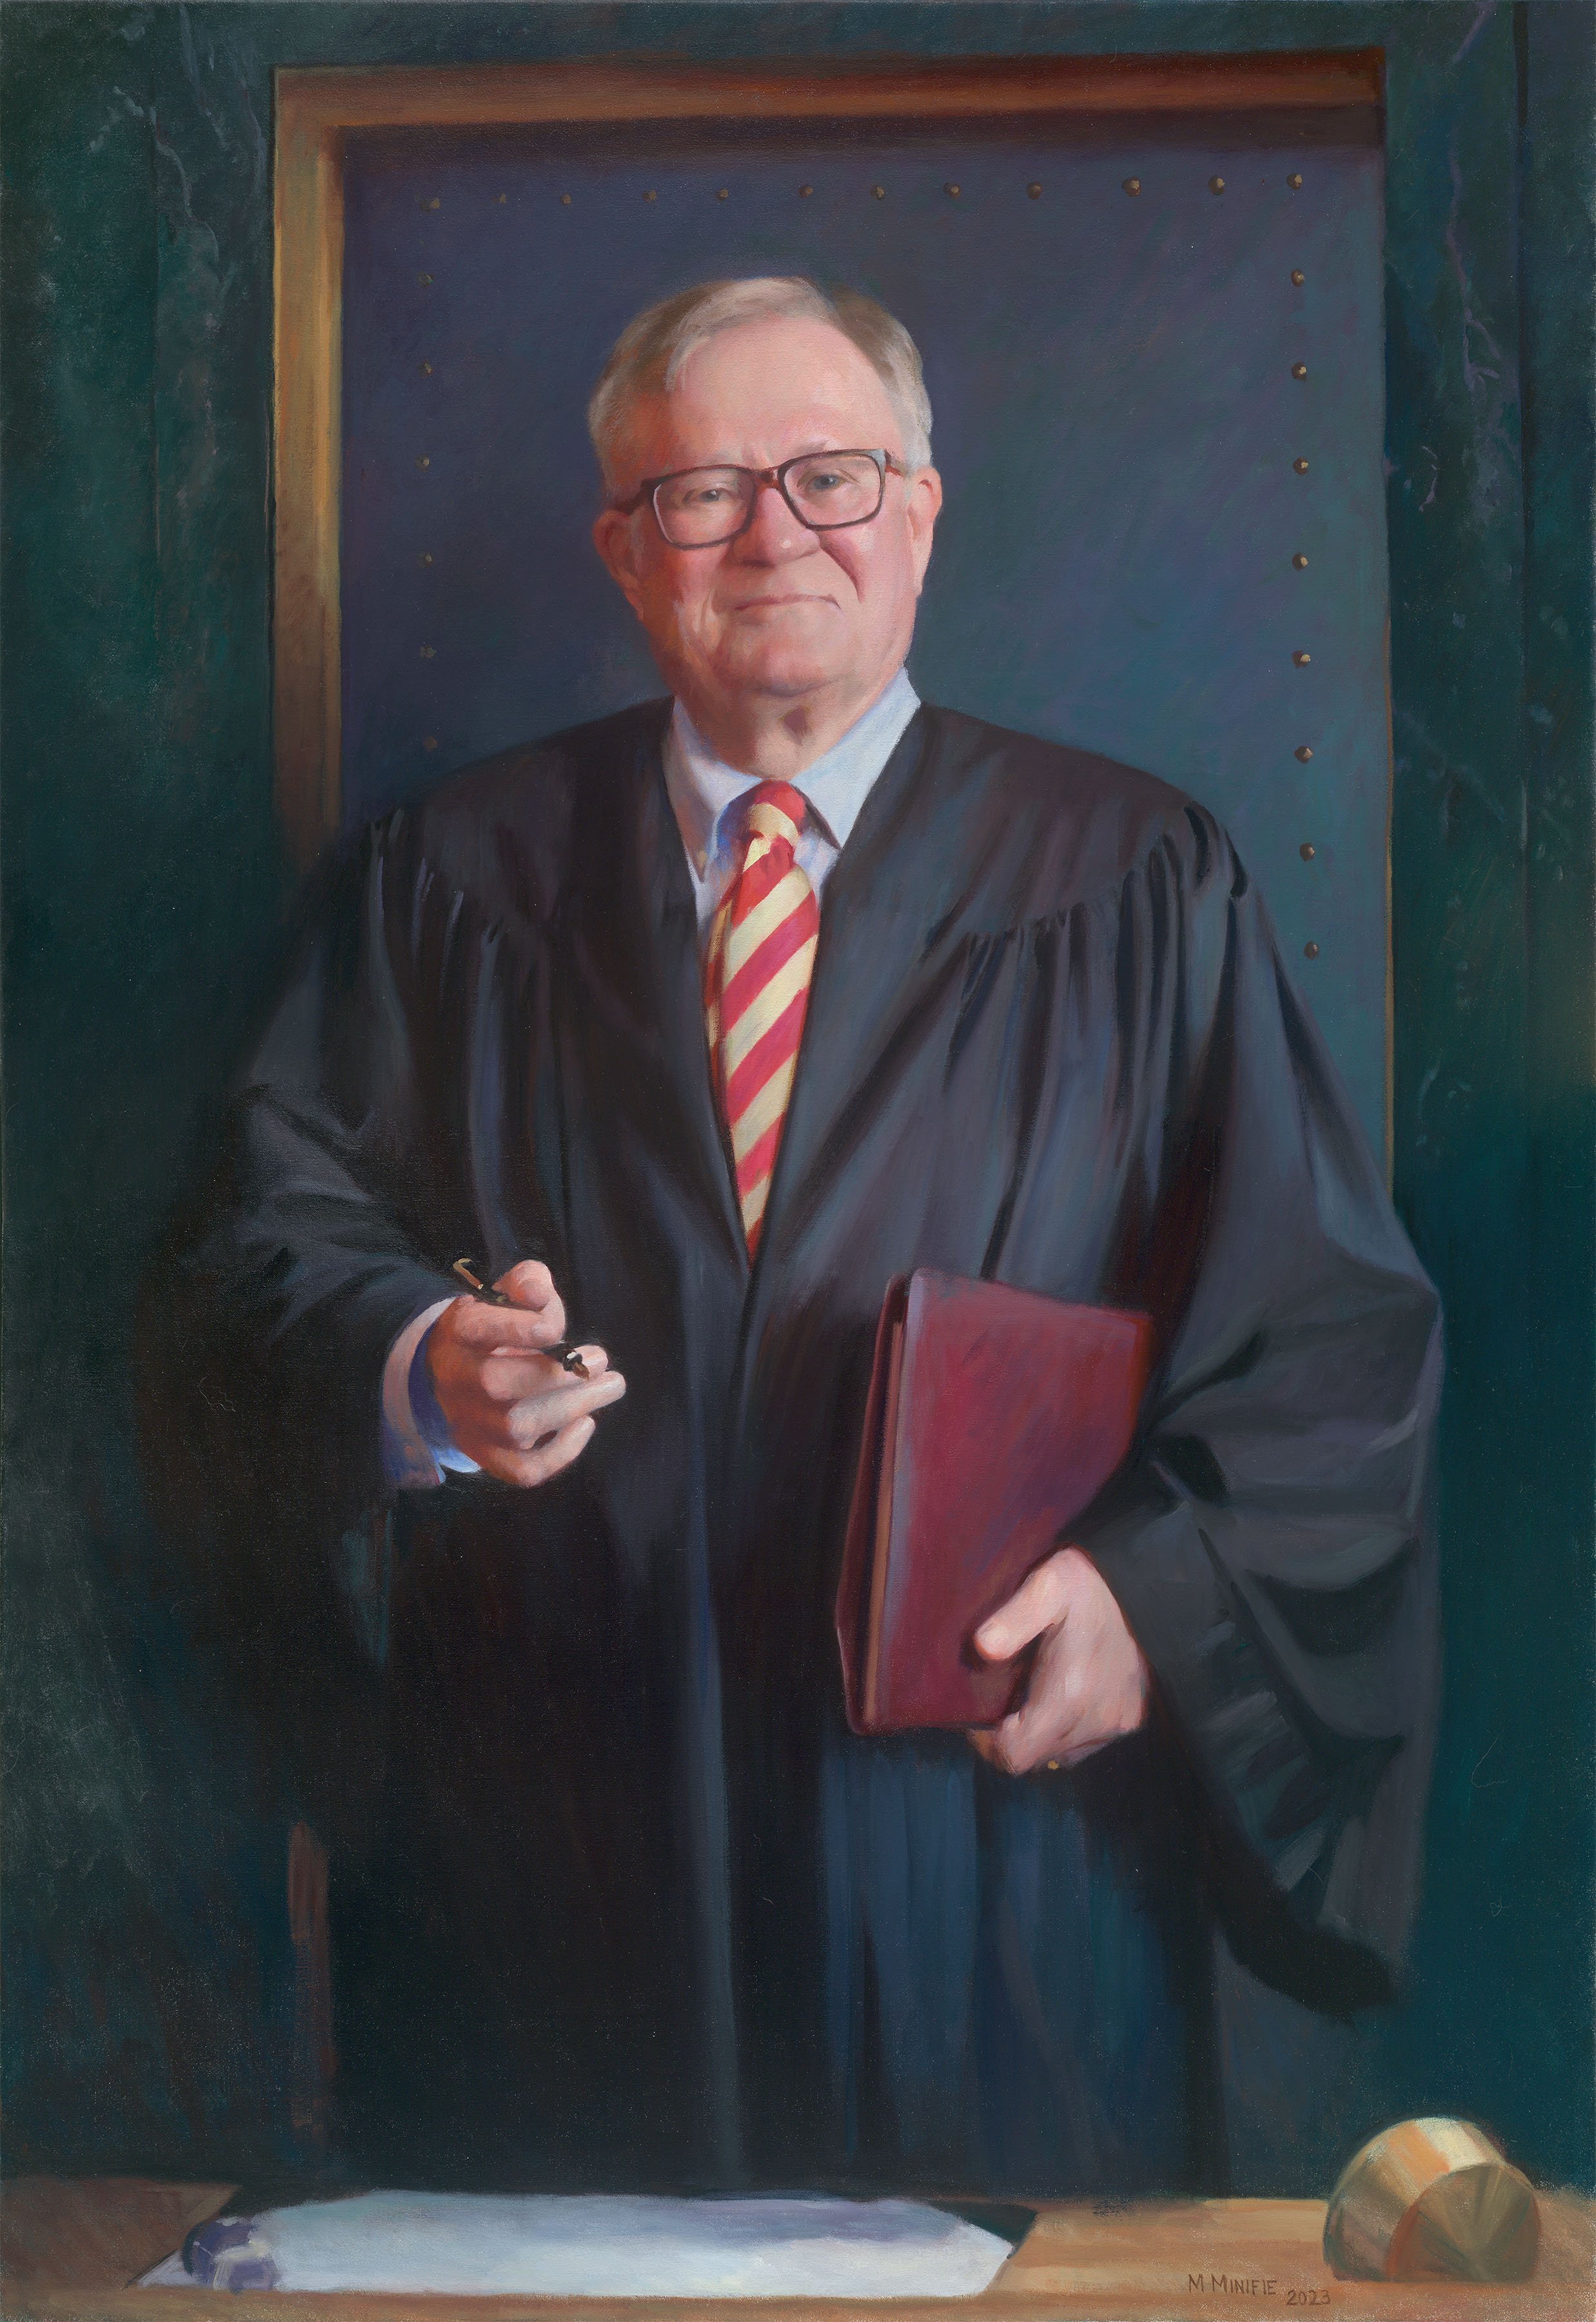 Judge Hillman